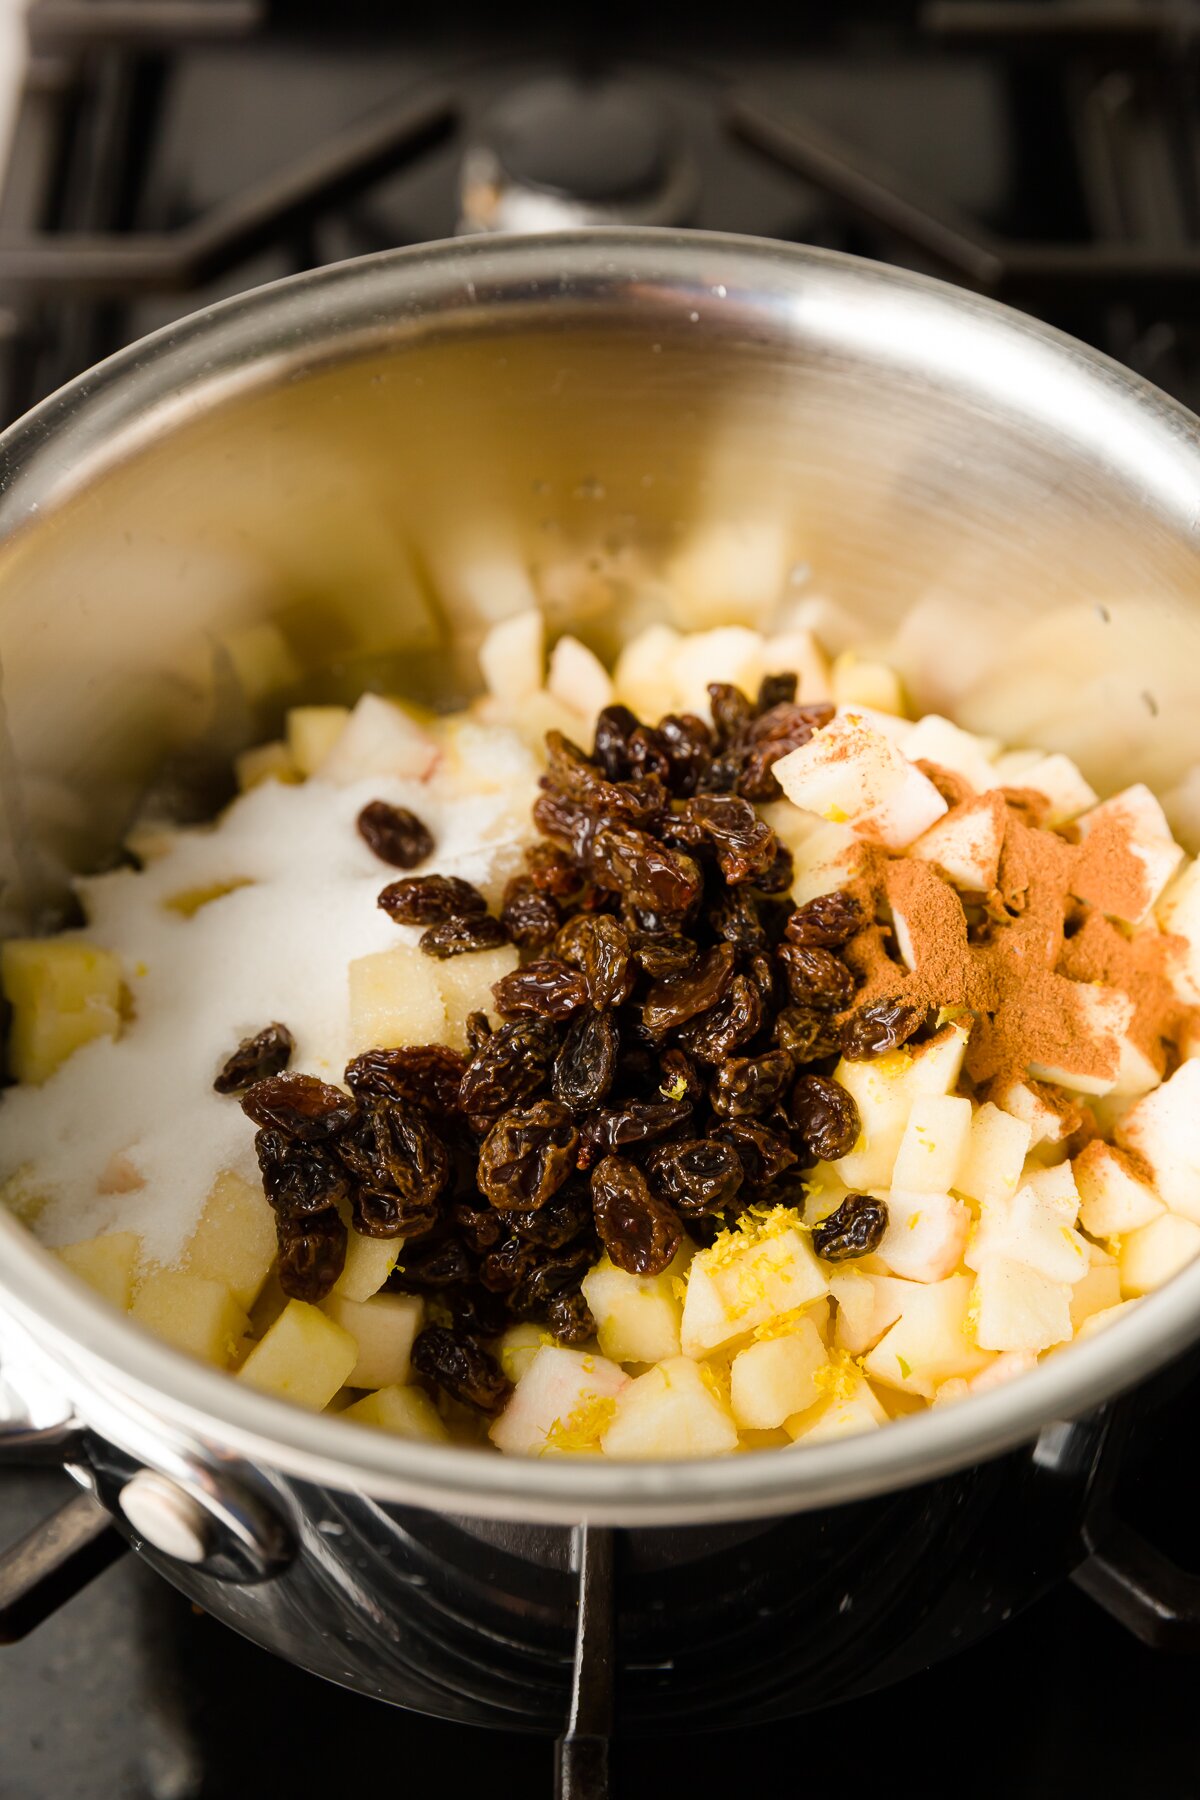 Pot with diced apples, cinnamon, sugar, and dark raisins on the stove